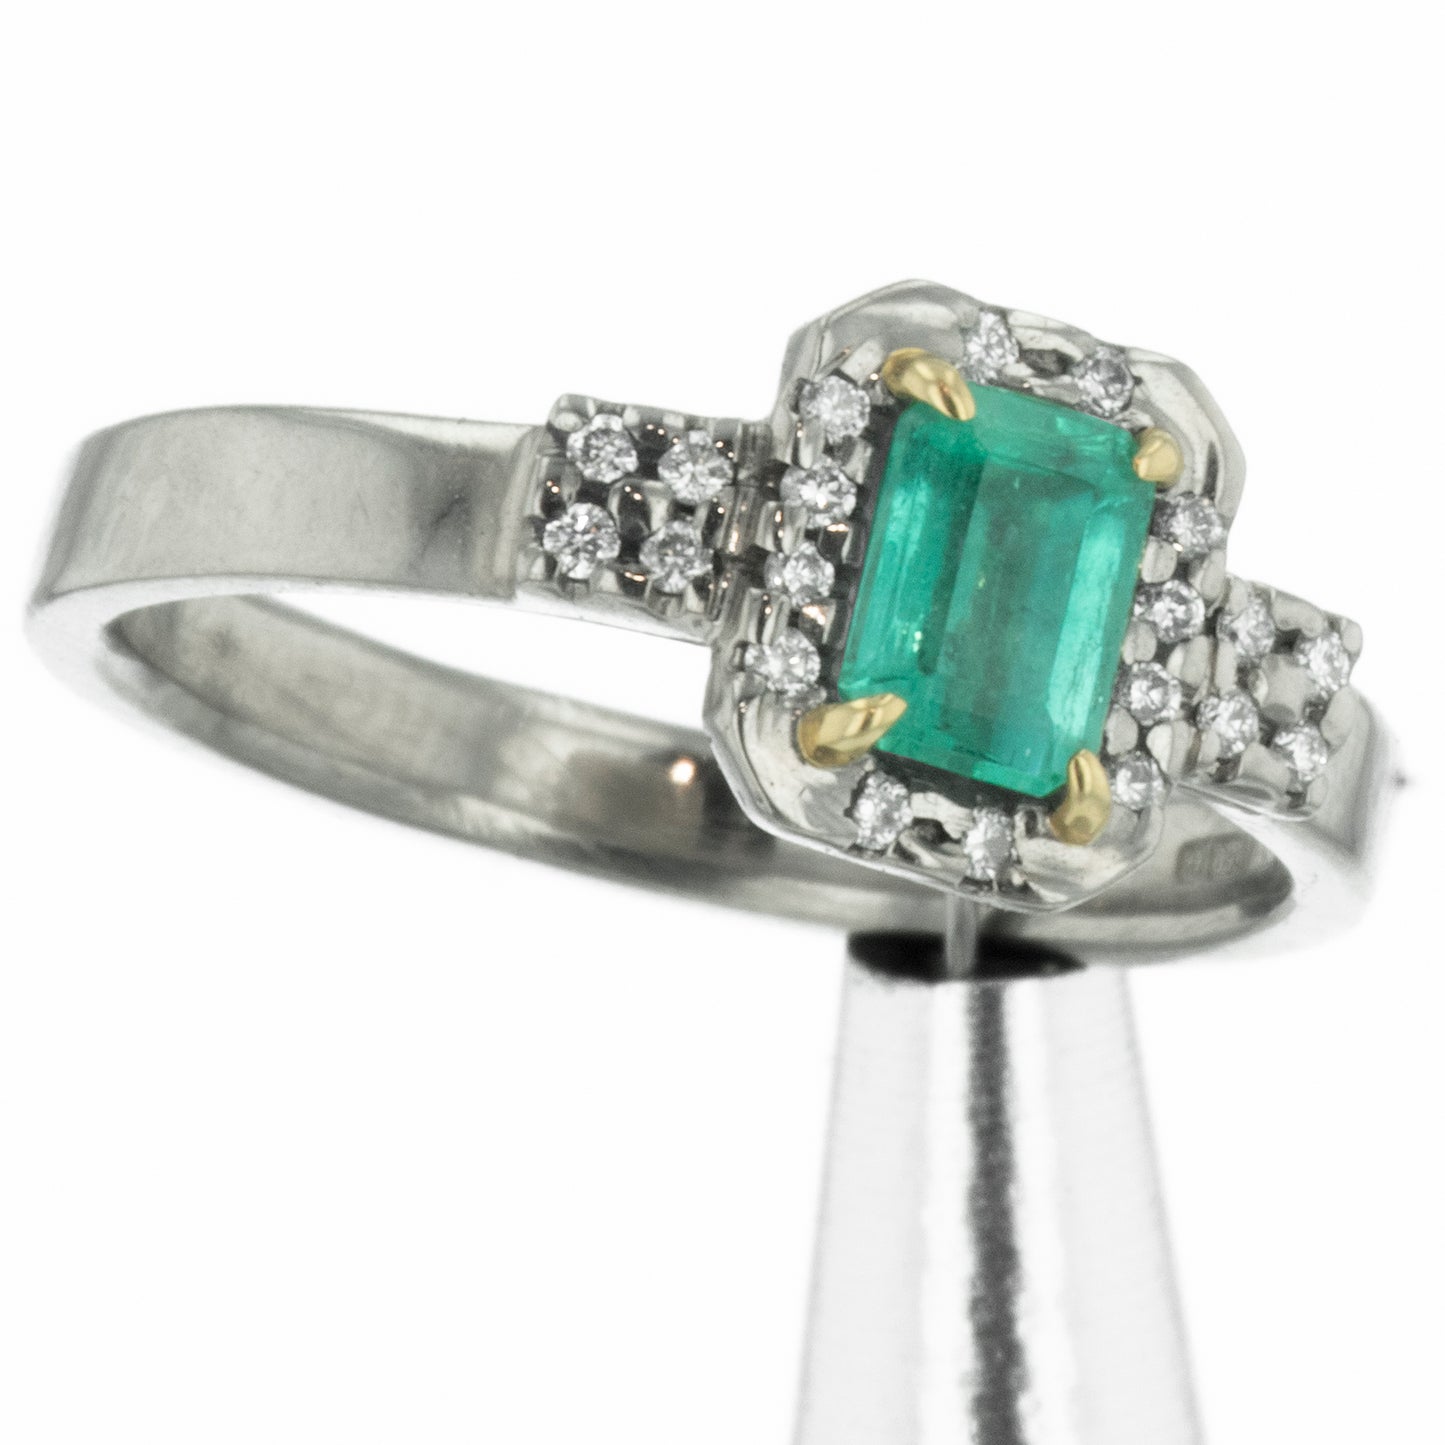 Handmade emerald ring